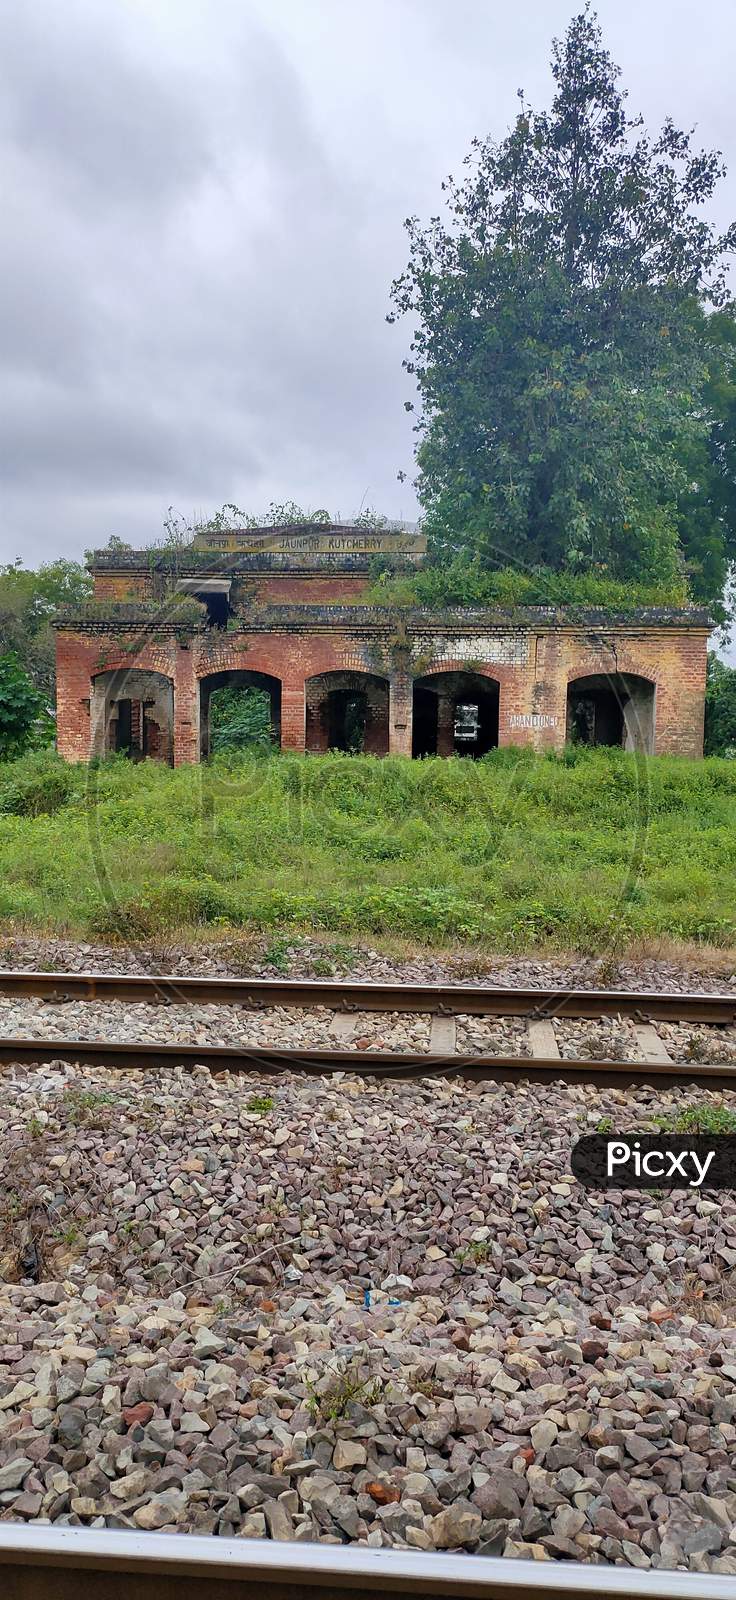 Jaunpur kacheri railway station